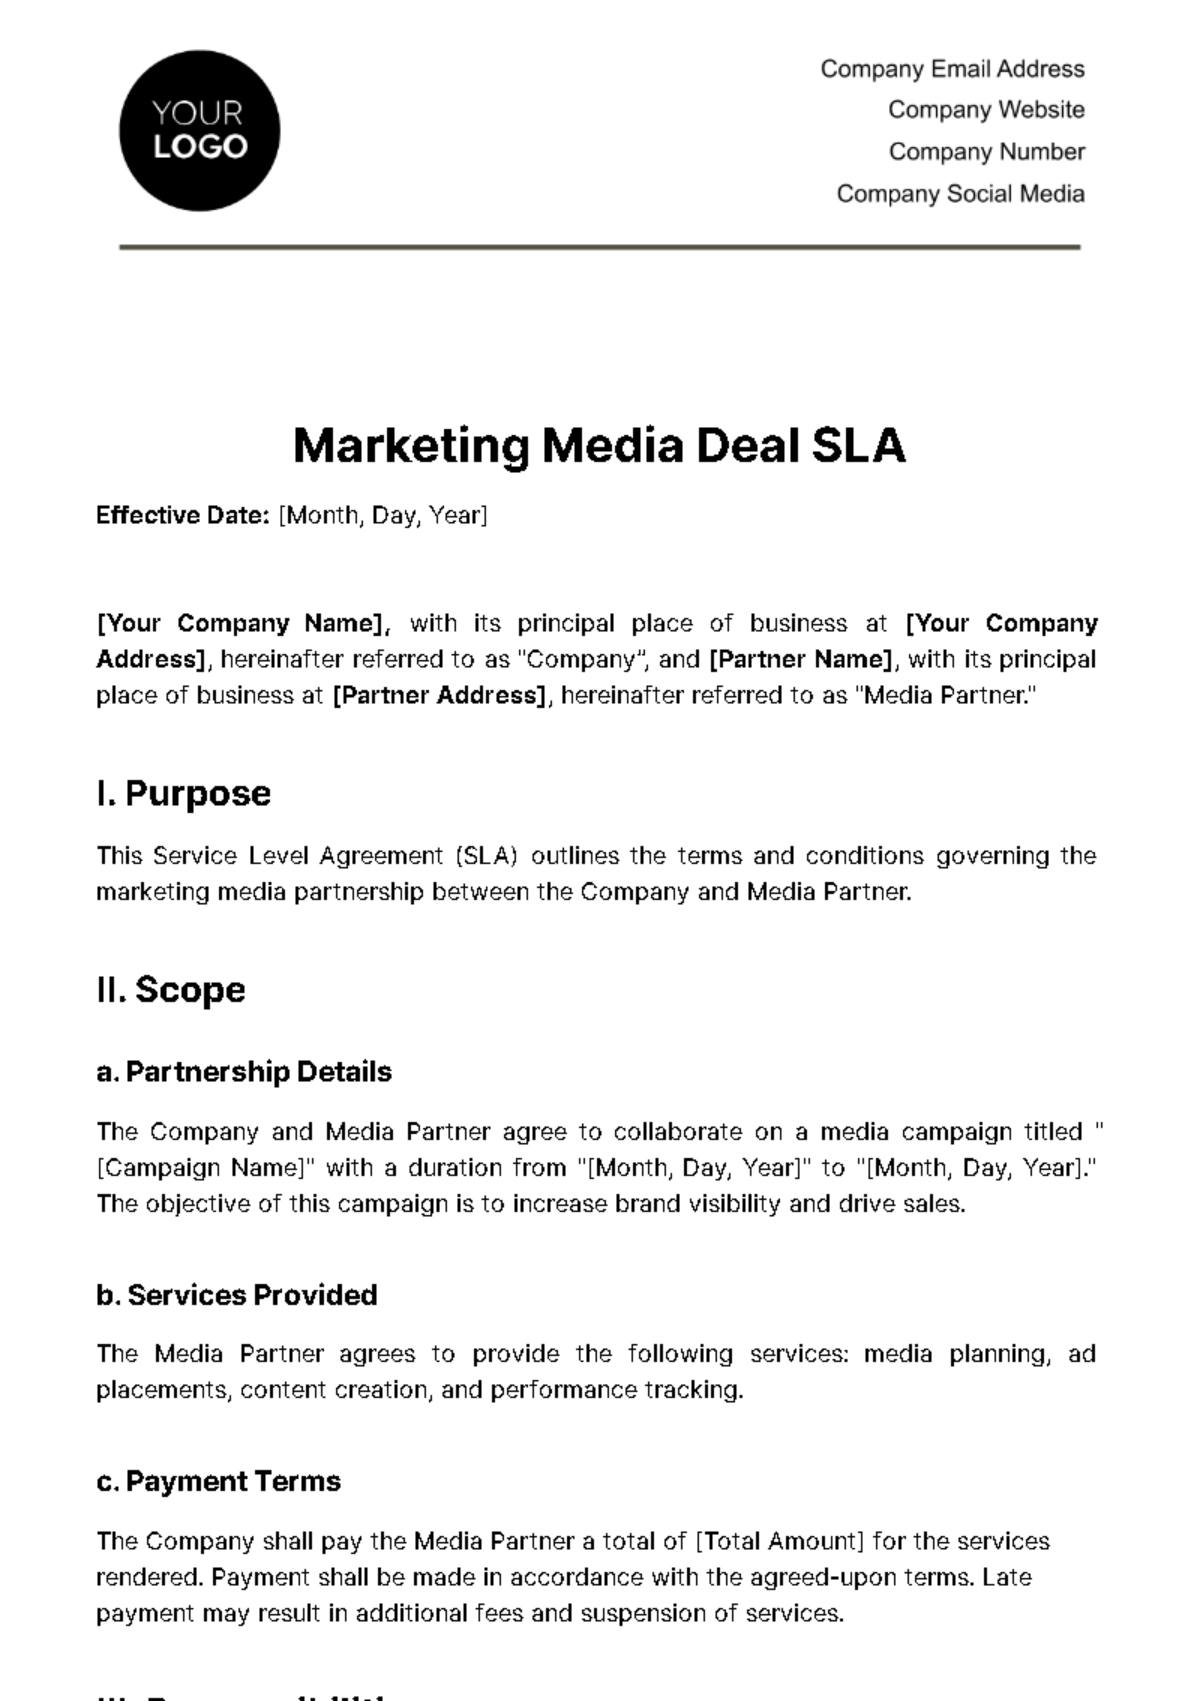 Free Marketing Media Deal SLA Template